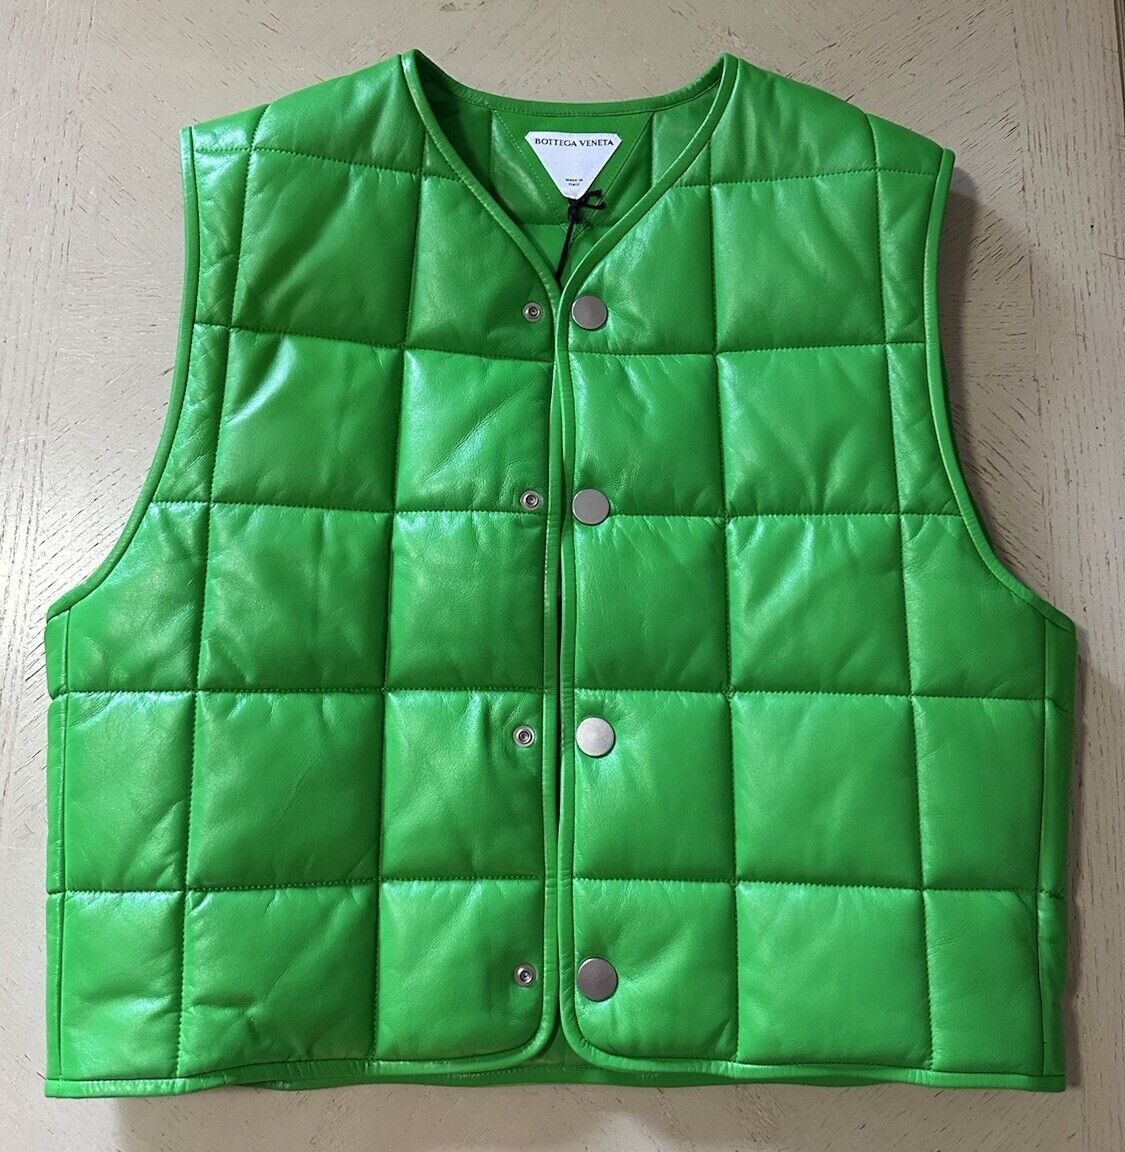 Bottega Veneta Men’s Leather Puffer Jacket Vest Green Size S Italy New $3100